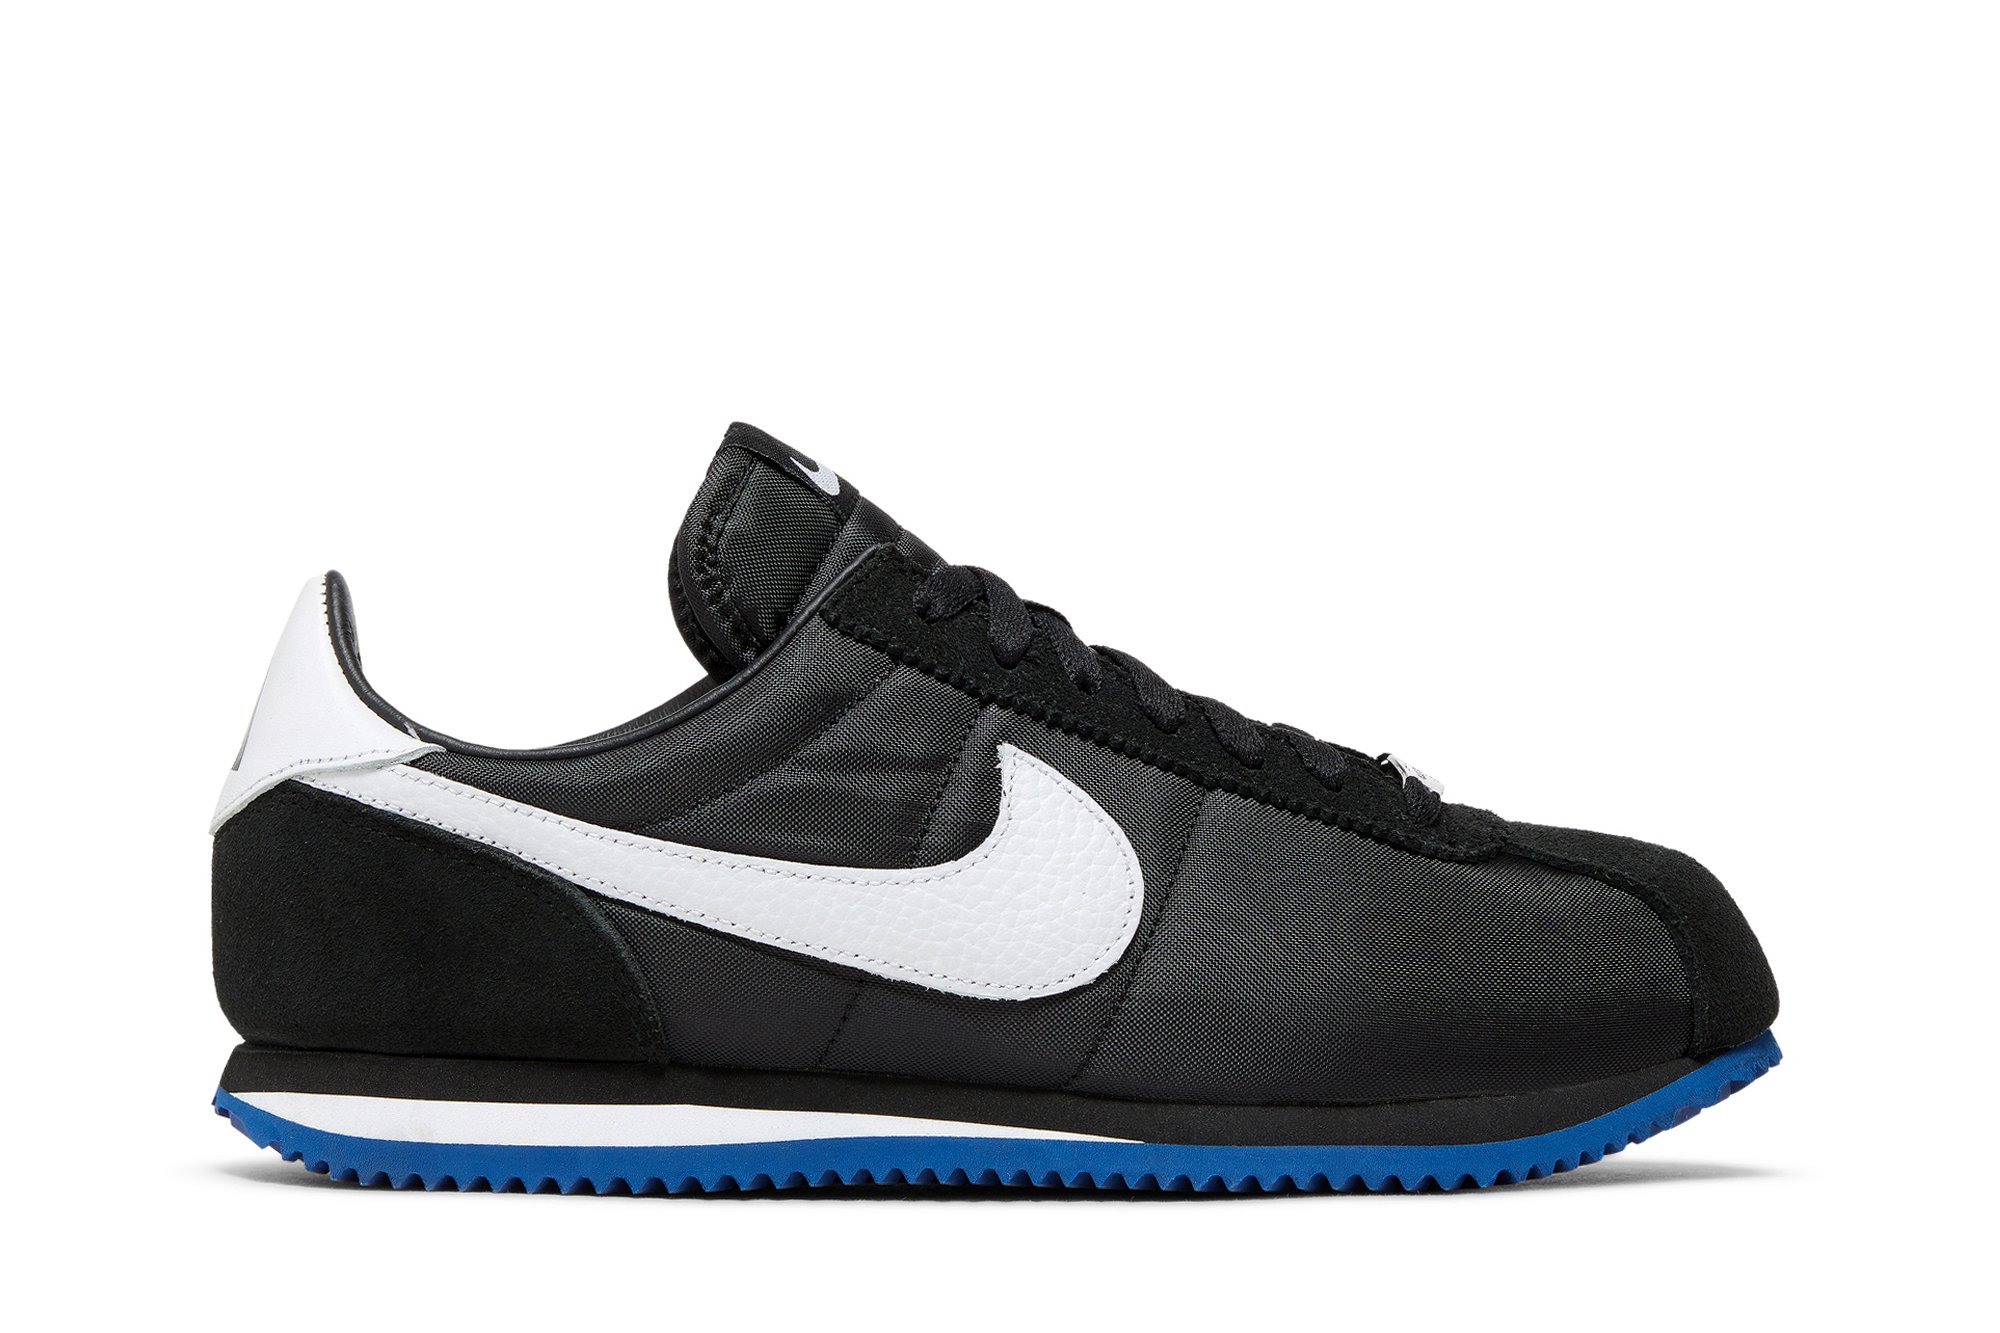 Buy UNDFTD x NikeLab Cortez SP 'LA' - 815653 014 - Black | GOAT